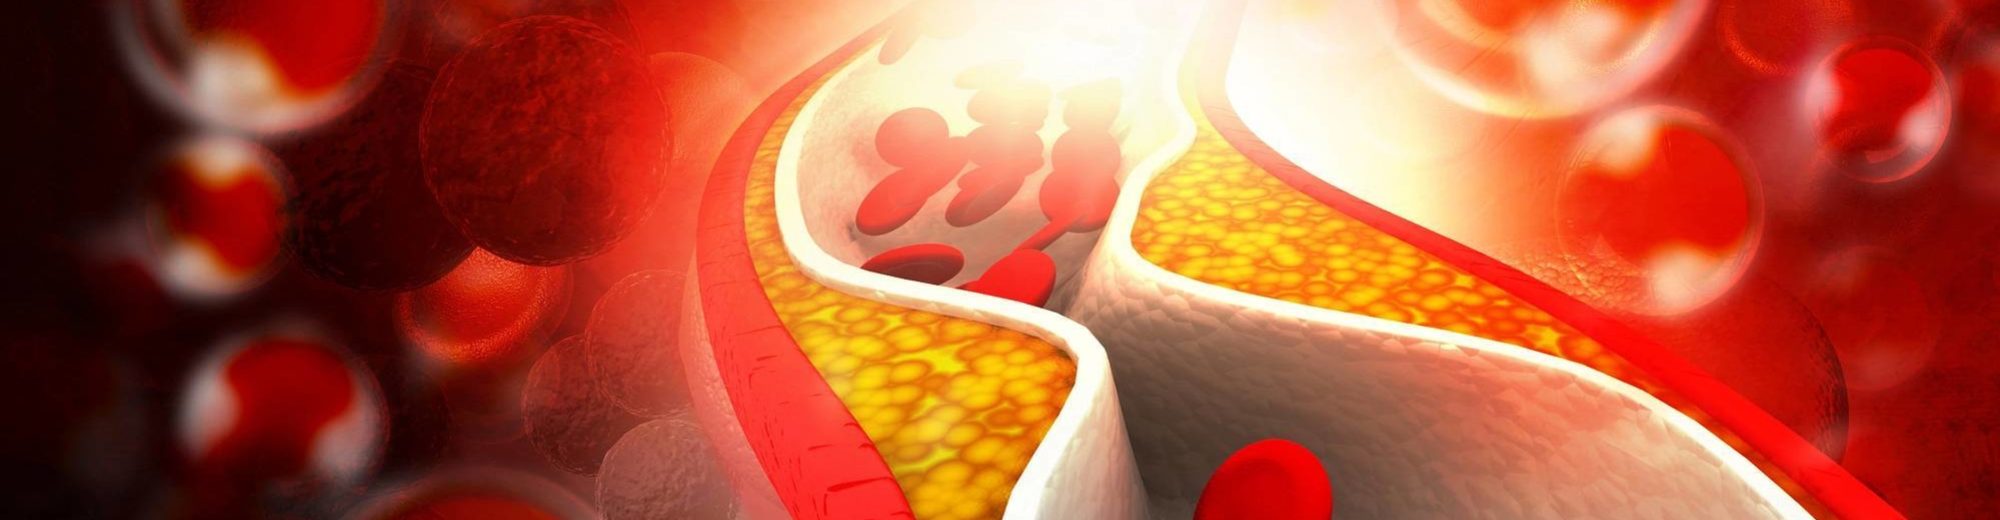 Cholesterol plaque in artery - Cardiovascular Disease (CVD) | Amarex